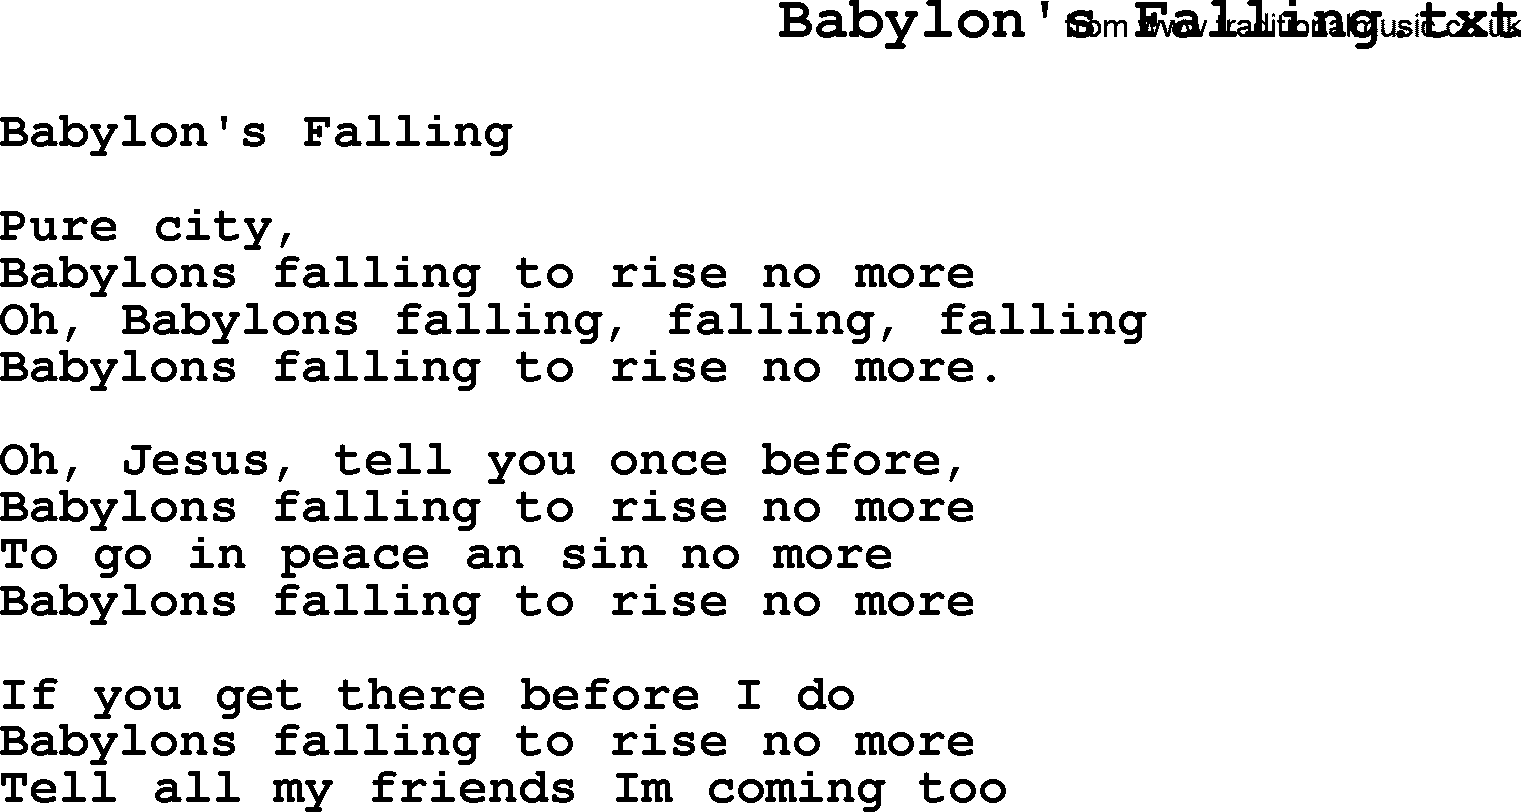 Negro Spiritual Song Lyrics for Babylon's Falling